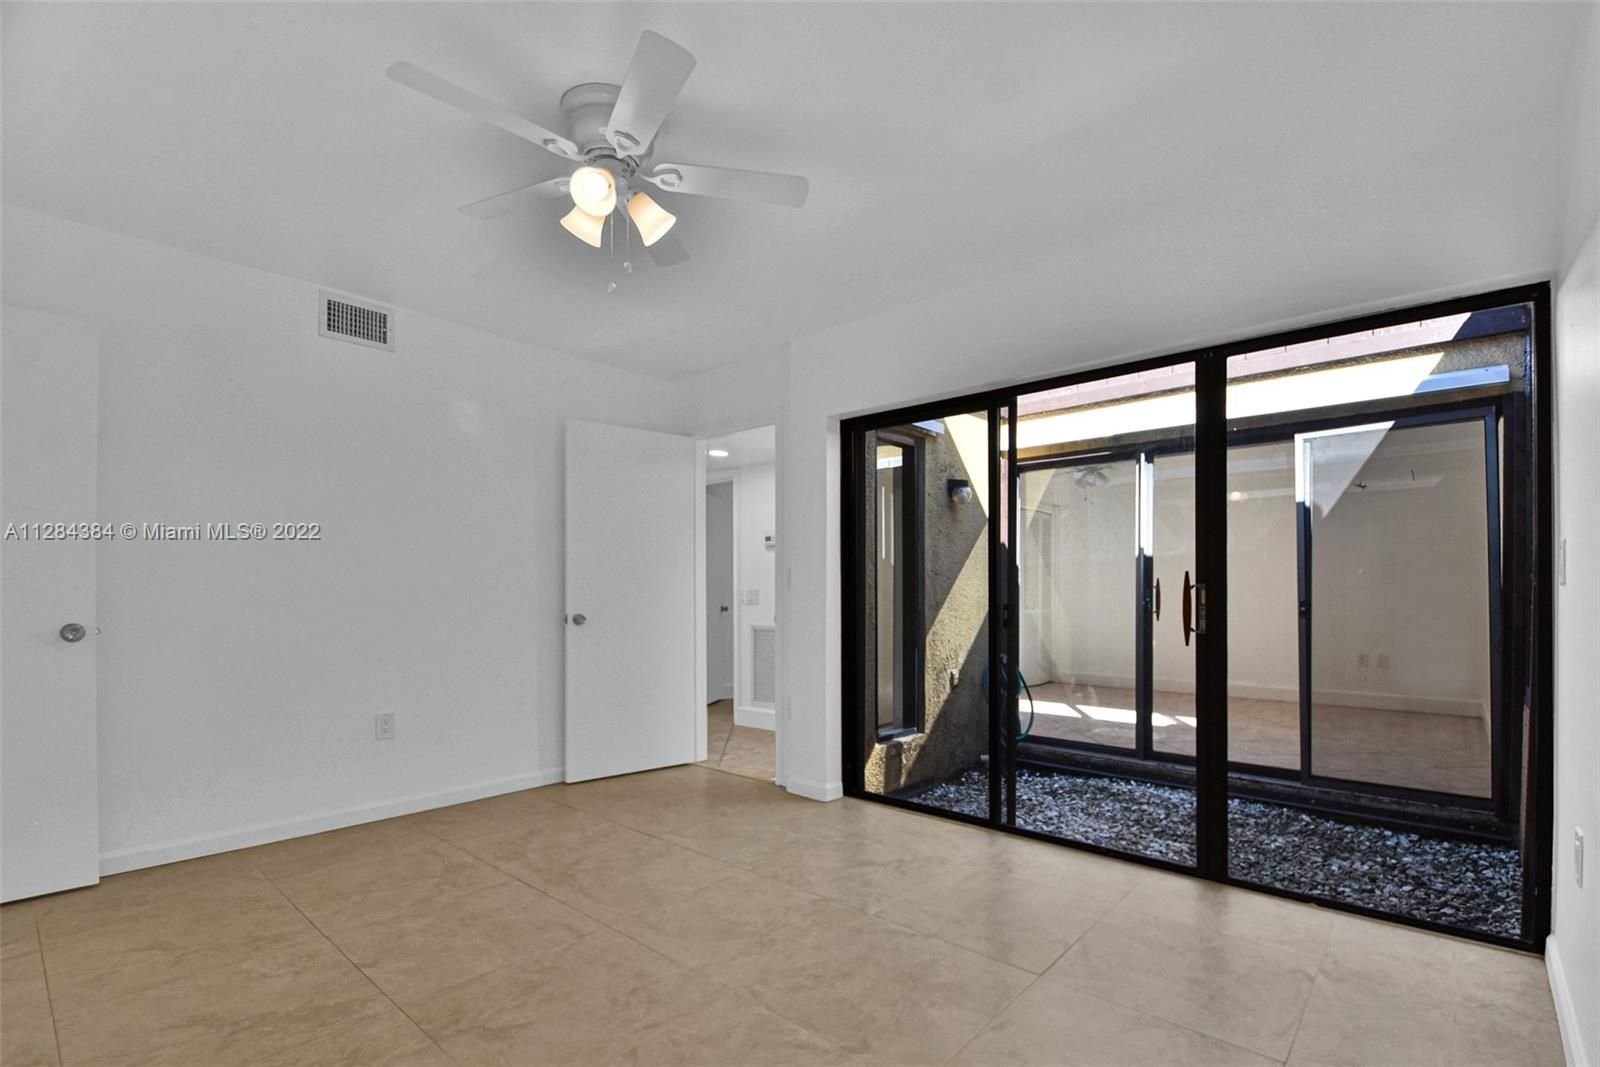 Real estate property located at 1034 204th Ter, Miami-Dade County, Miami, FL